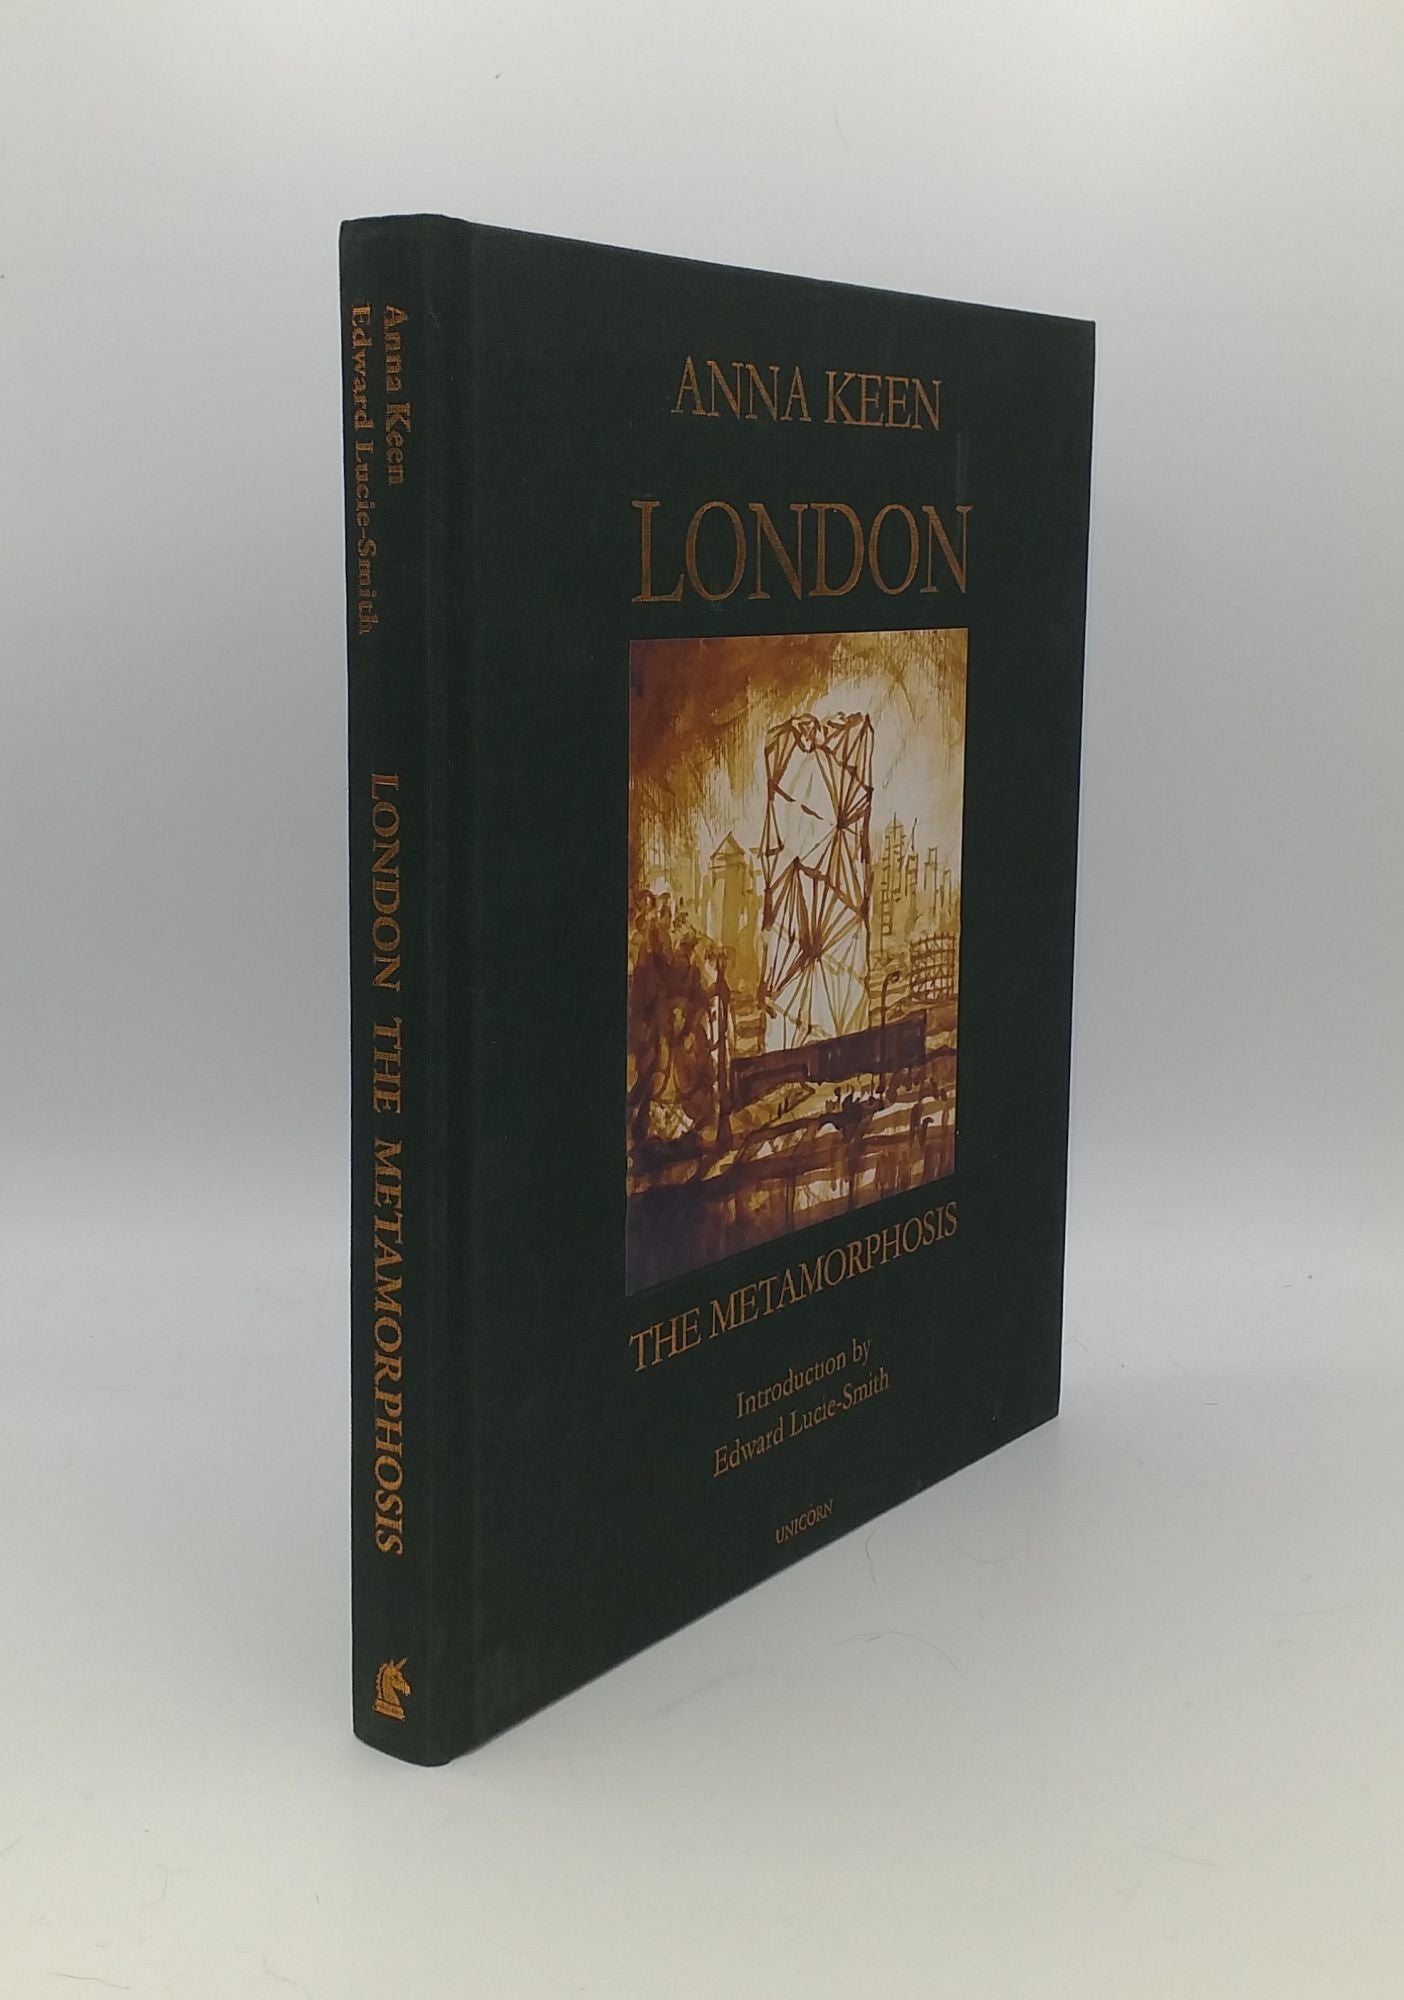 KEEN Anna - London the Metamorphosis